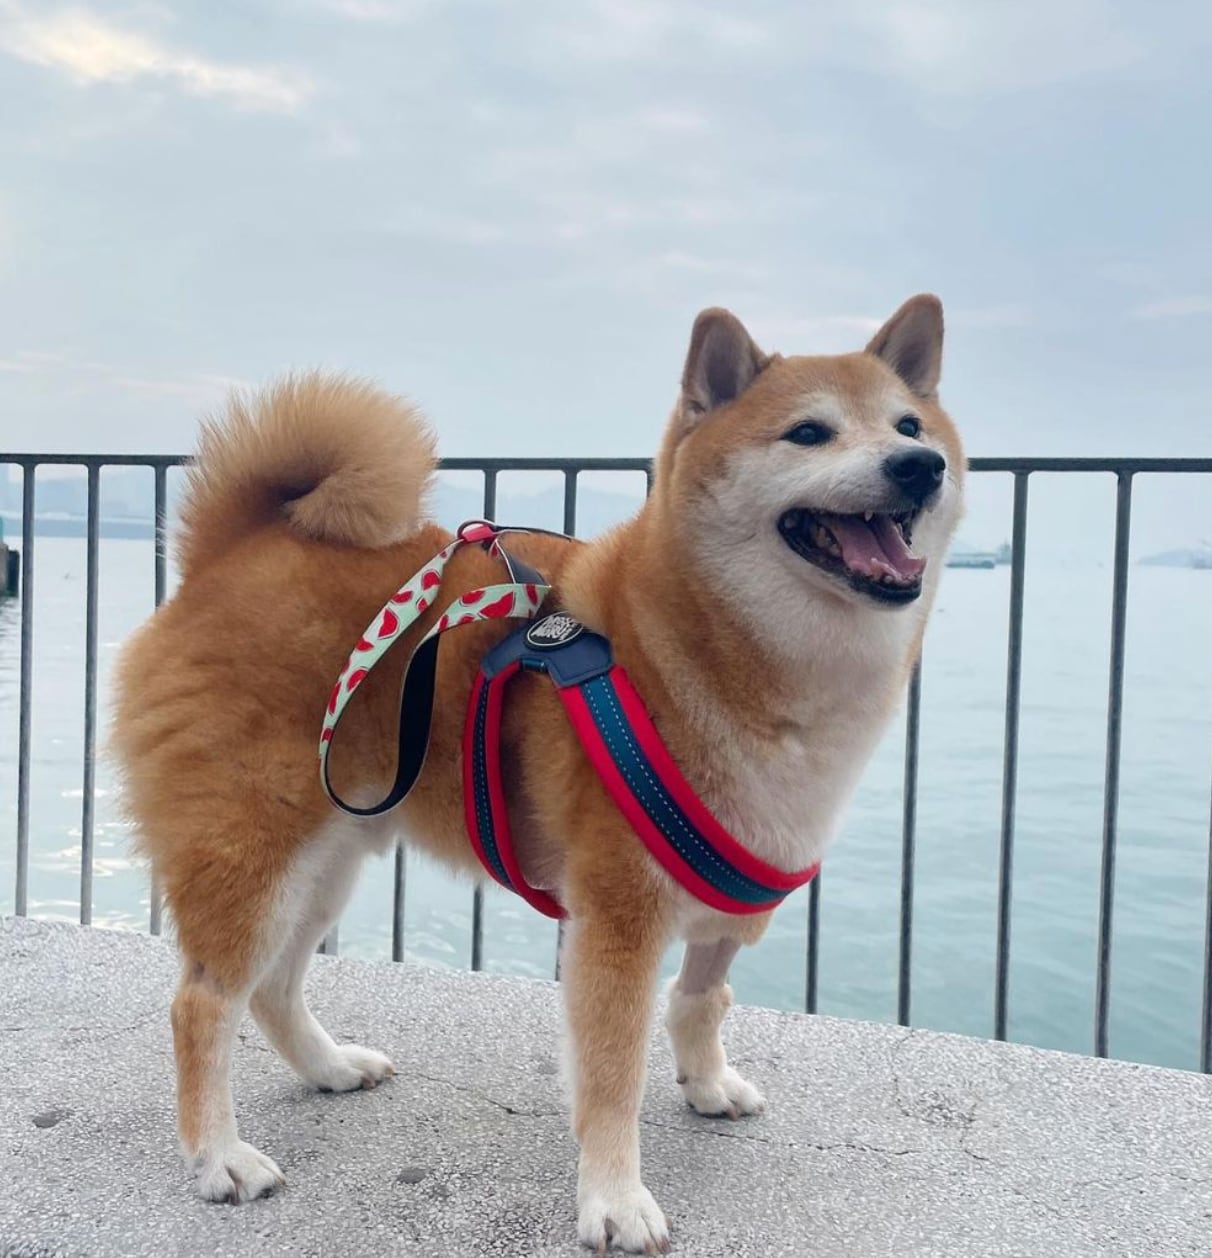 La vida de la mascota era compartida a diario en Instagram donde era toda una estrella canina